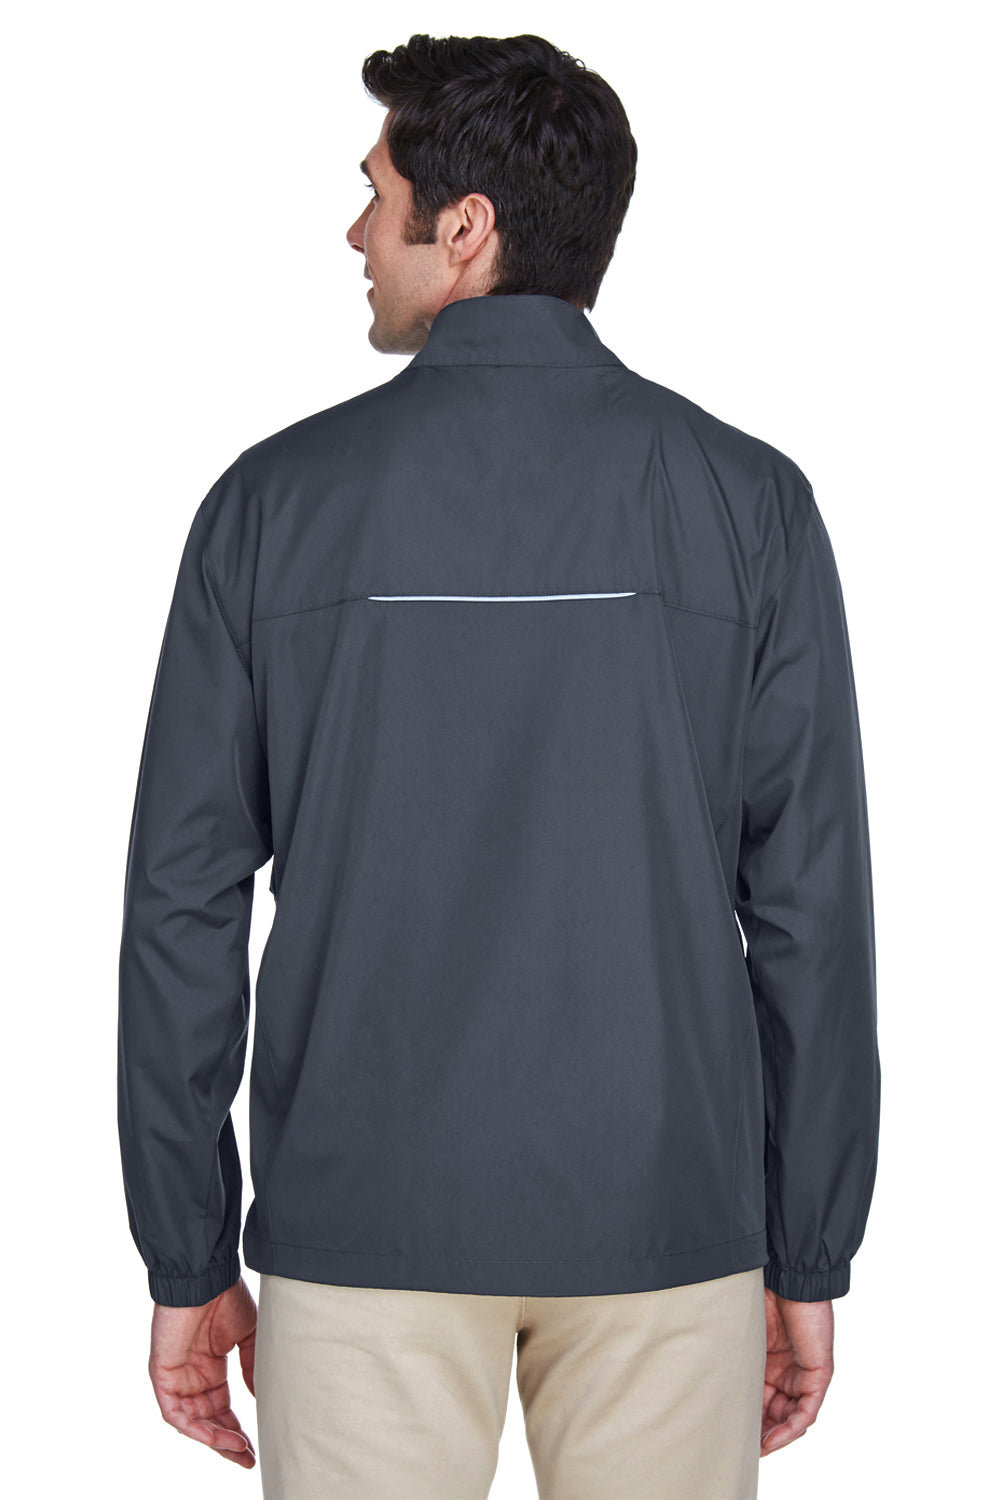 Core 365 88183 Mens Motivate Water Resistant Full Zip Jacket Carbon Grey Back